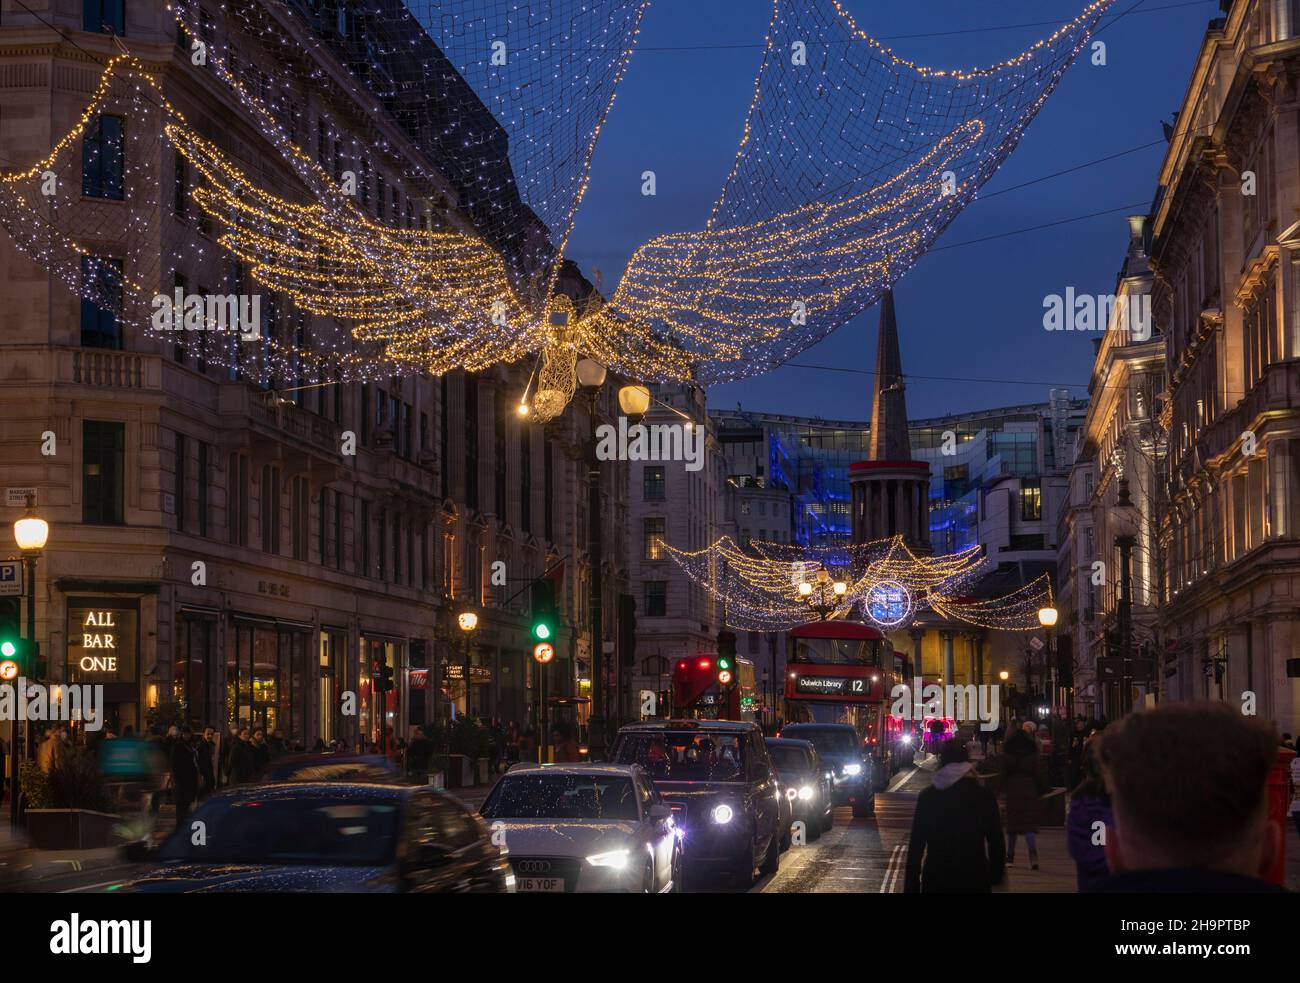 UK, England, London, Regent Street, evening, Christmas illuminations Stock Photo